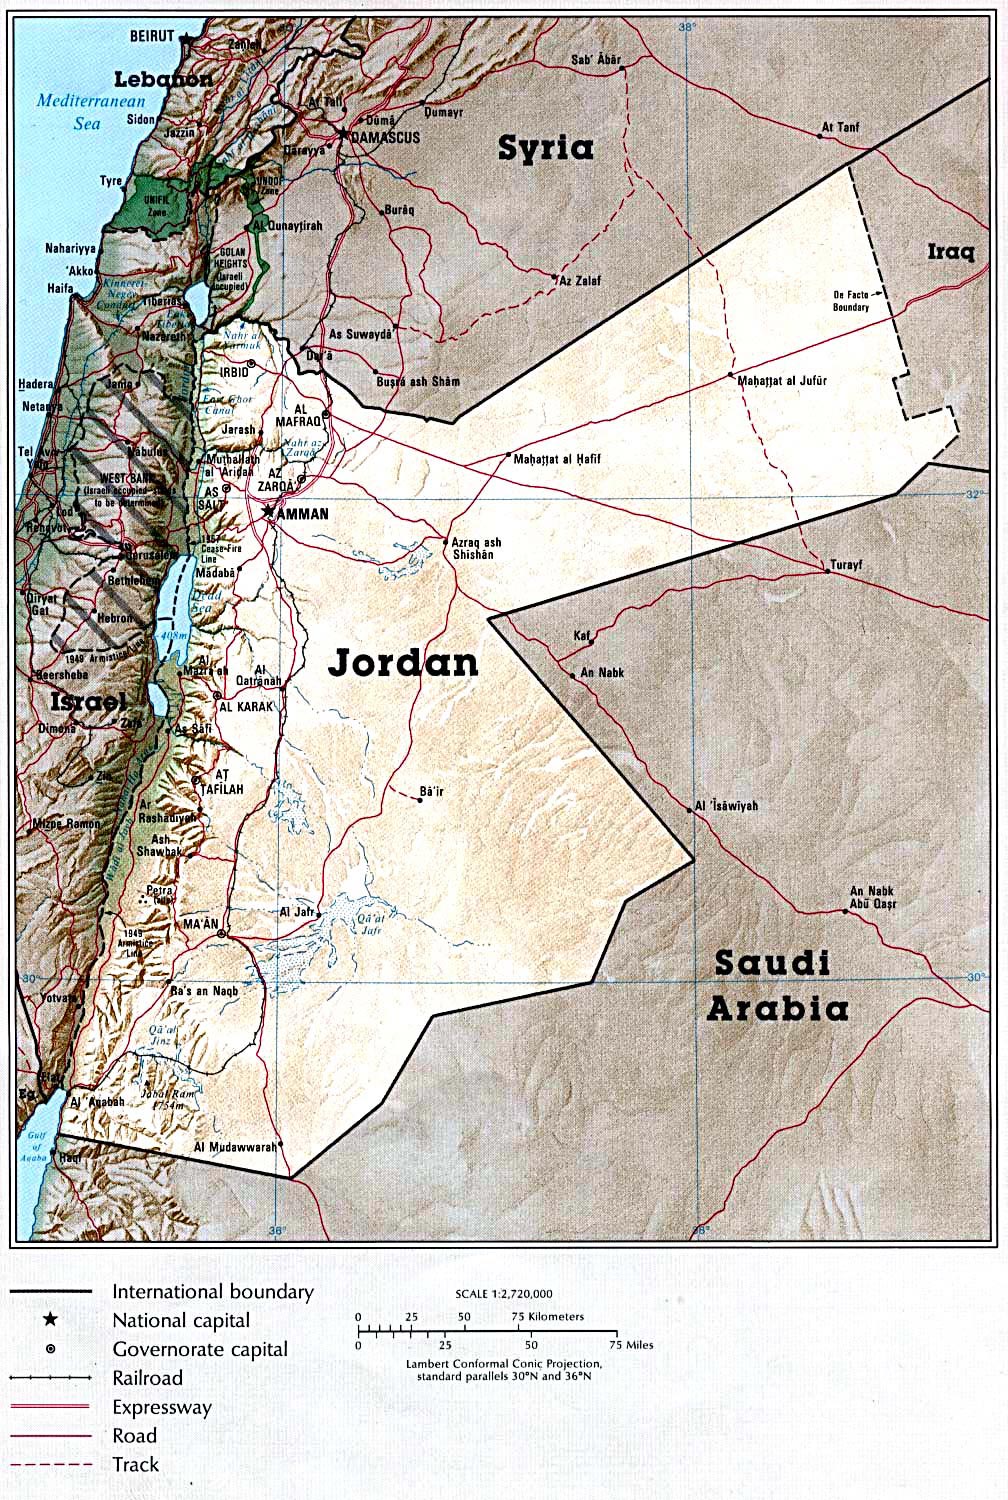 jordan attractions map